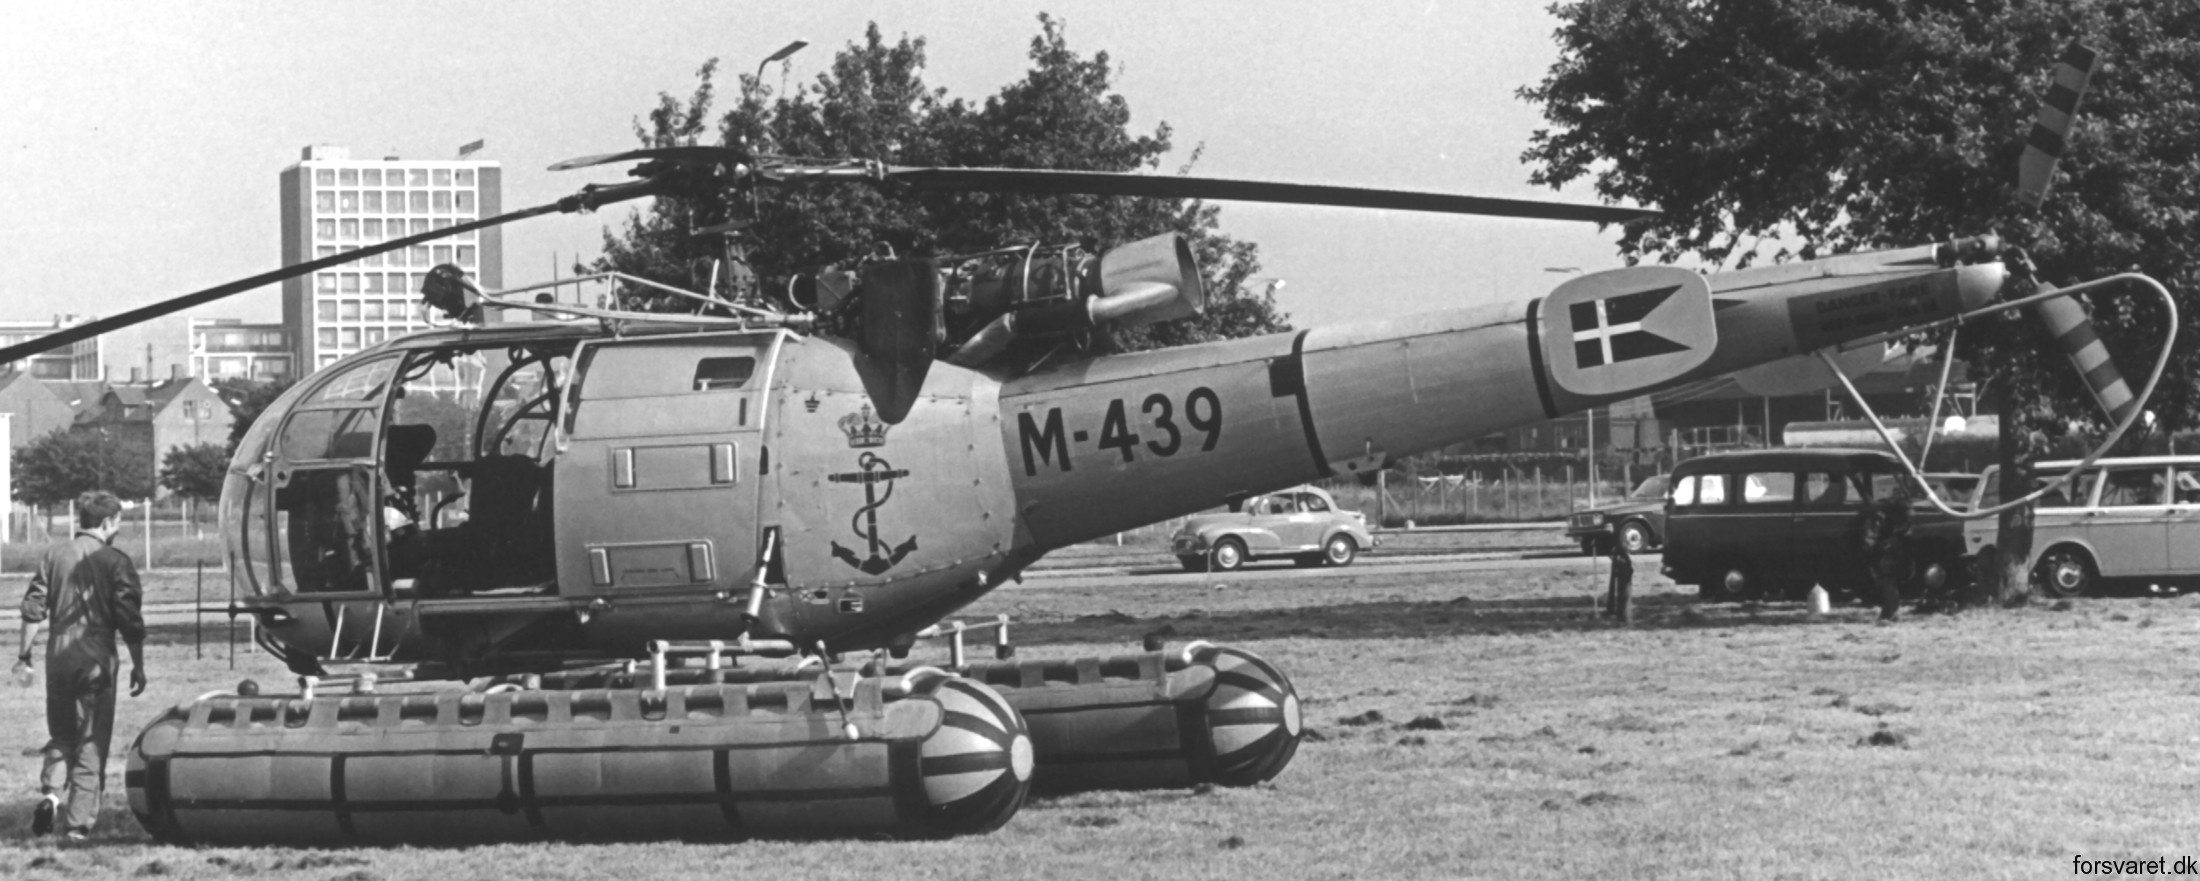 sa 316b alouette iii helicopter royal danish navy søværnet kongelige danske marine sud aviation m-439 08